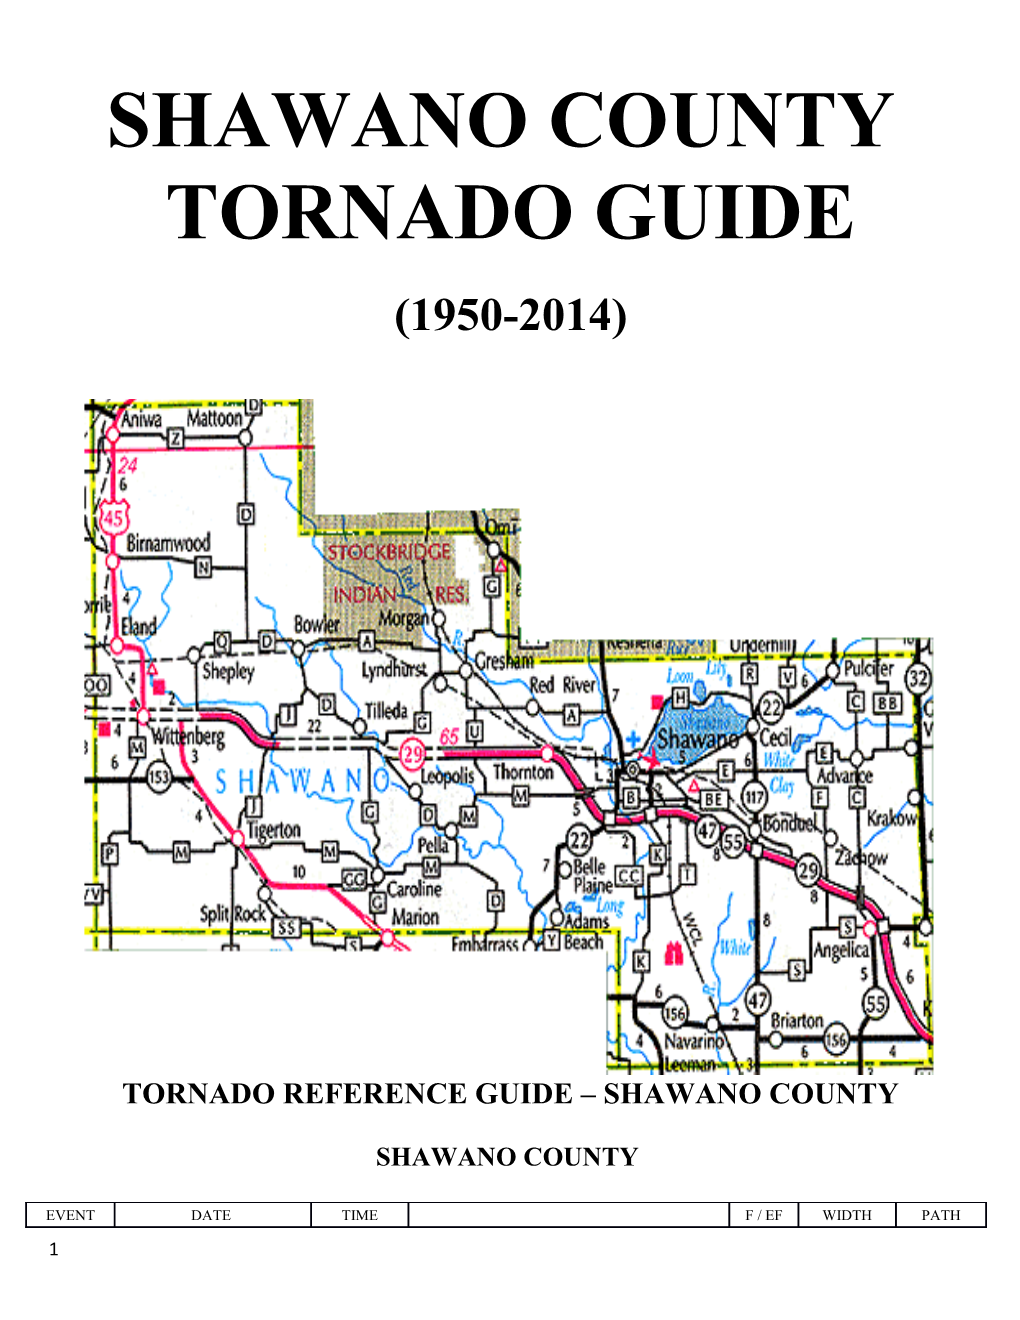 Tornado Reference Guide Shawano County